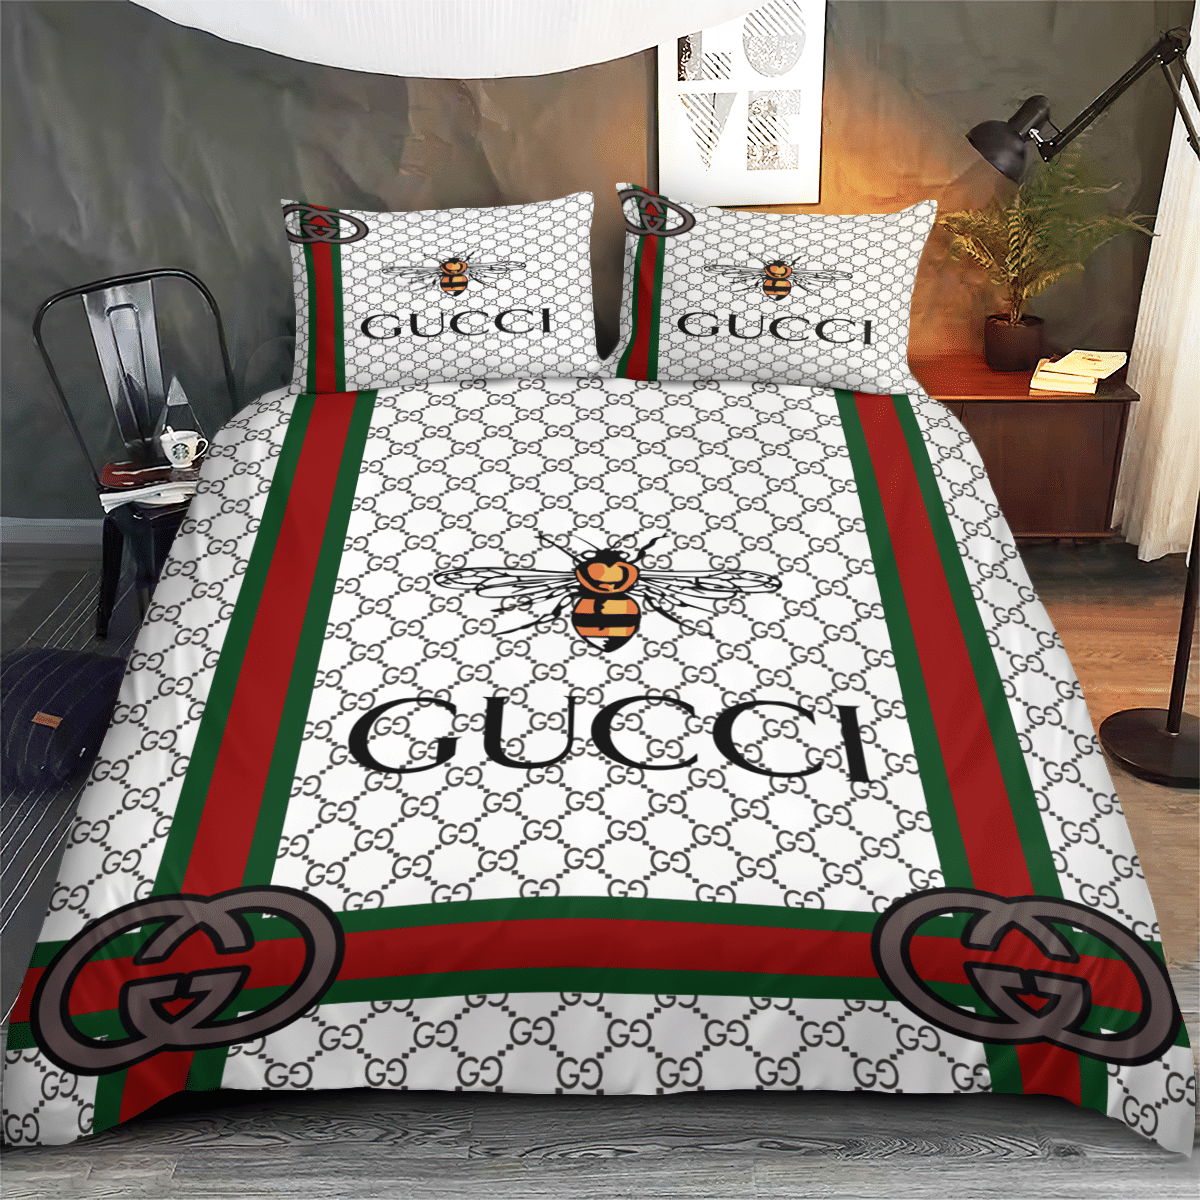 Italian High-end Brand #27 3D Personalized Customized Bedding Sets Duvet Cover Bedroom Sets Bedset Bedlinen-01